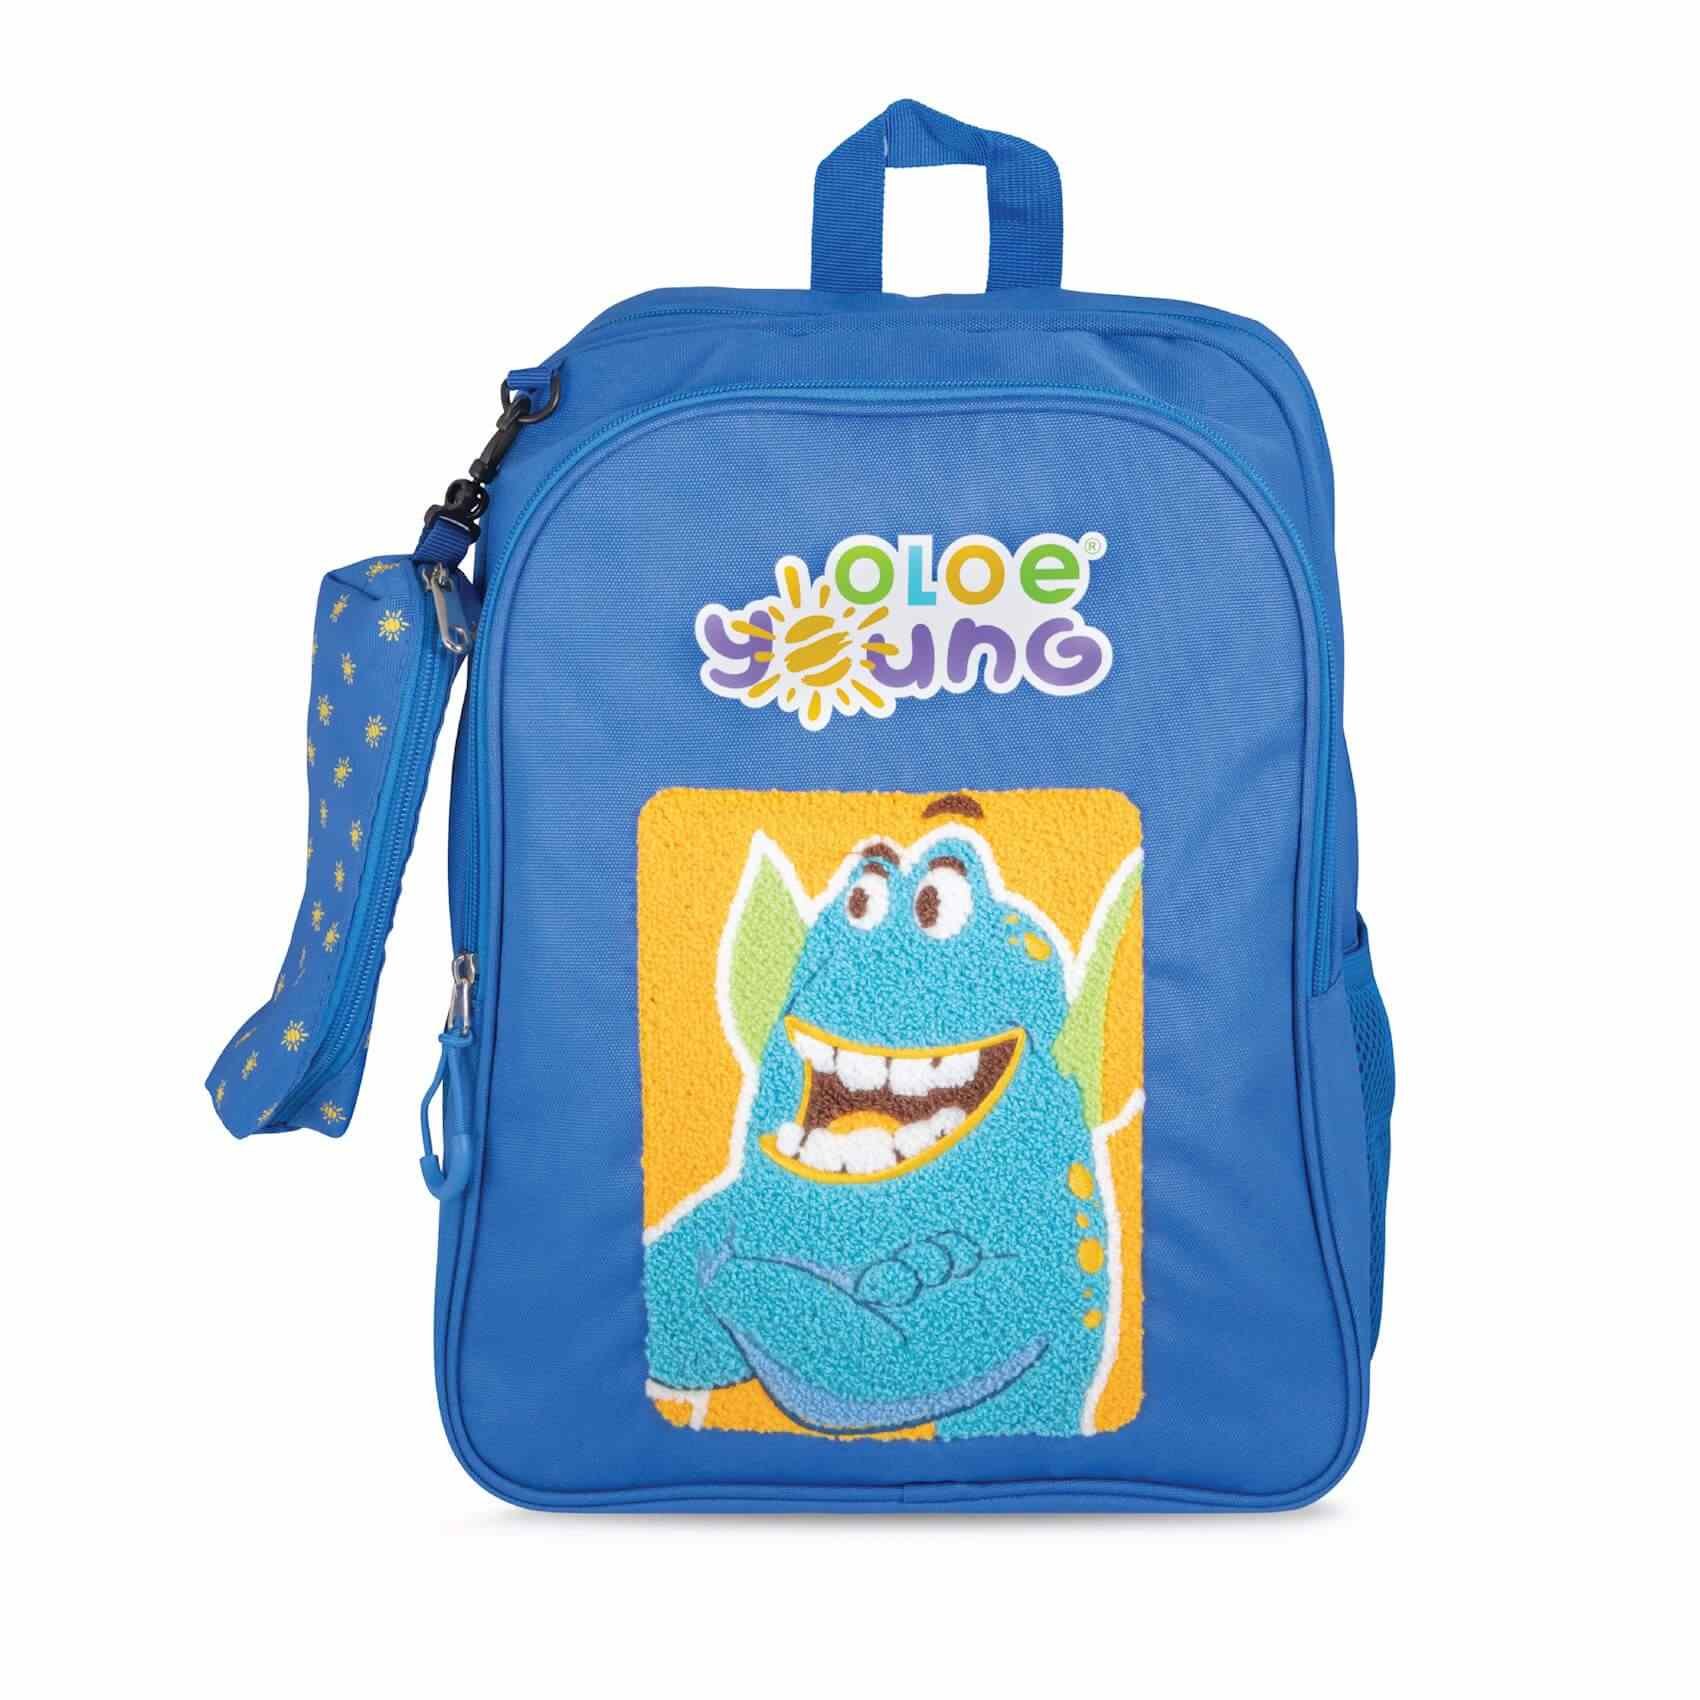 oloe-plush-character-backpack-blue-eko-front-facing